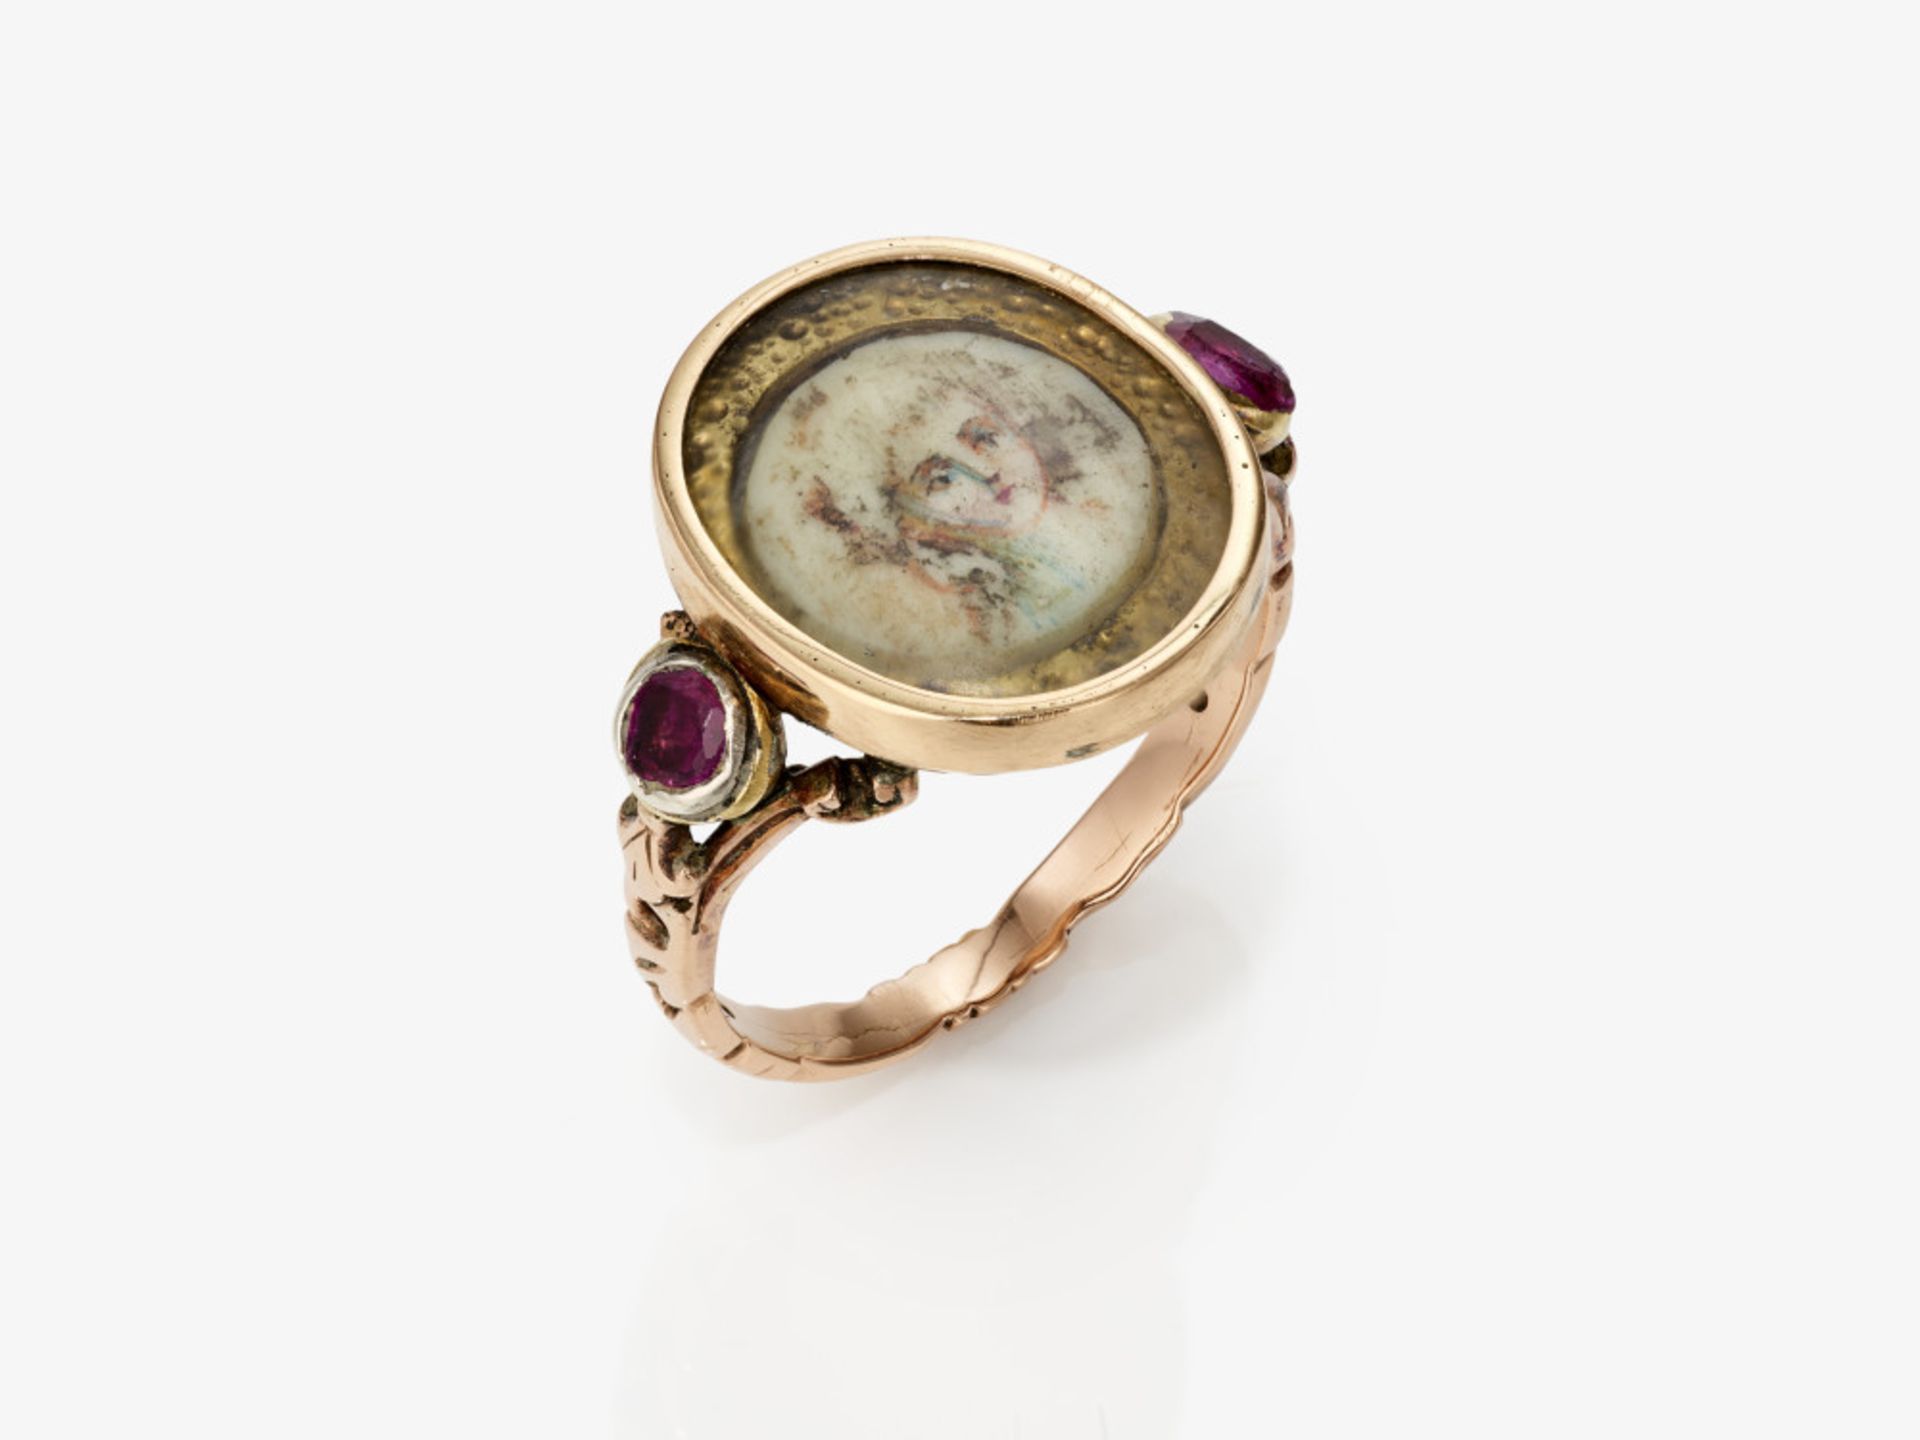 A ring with a miniature - England, circa 1780